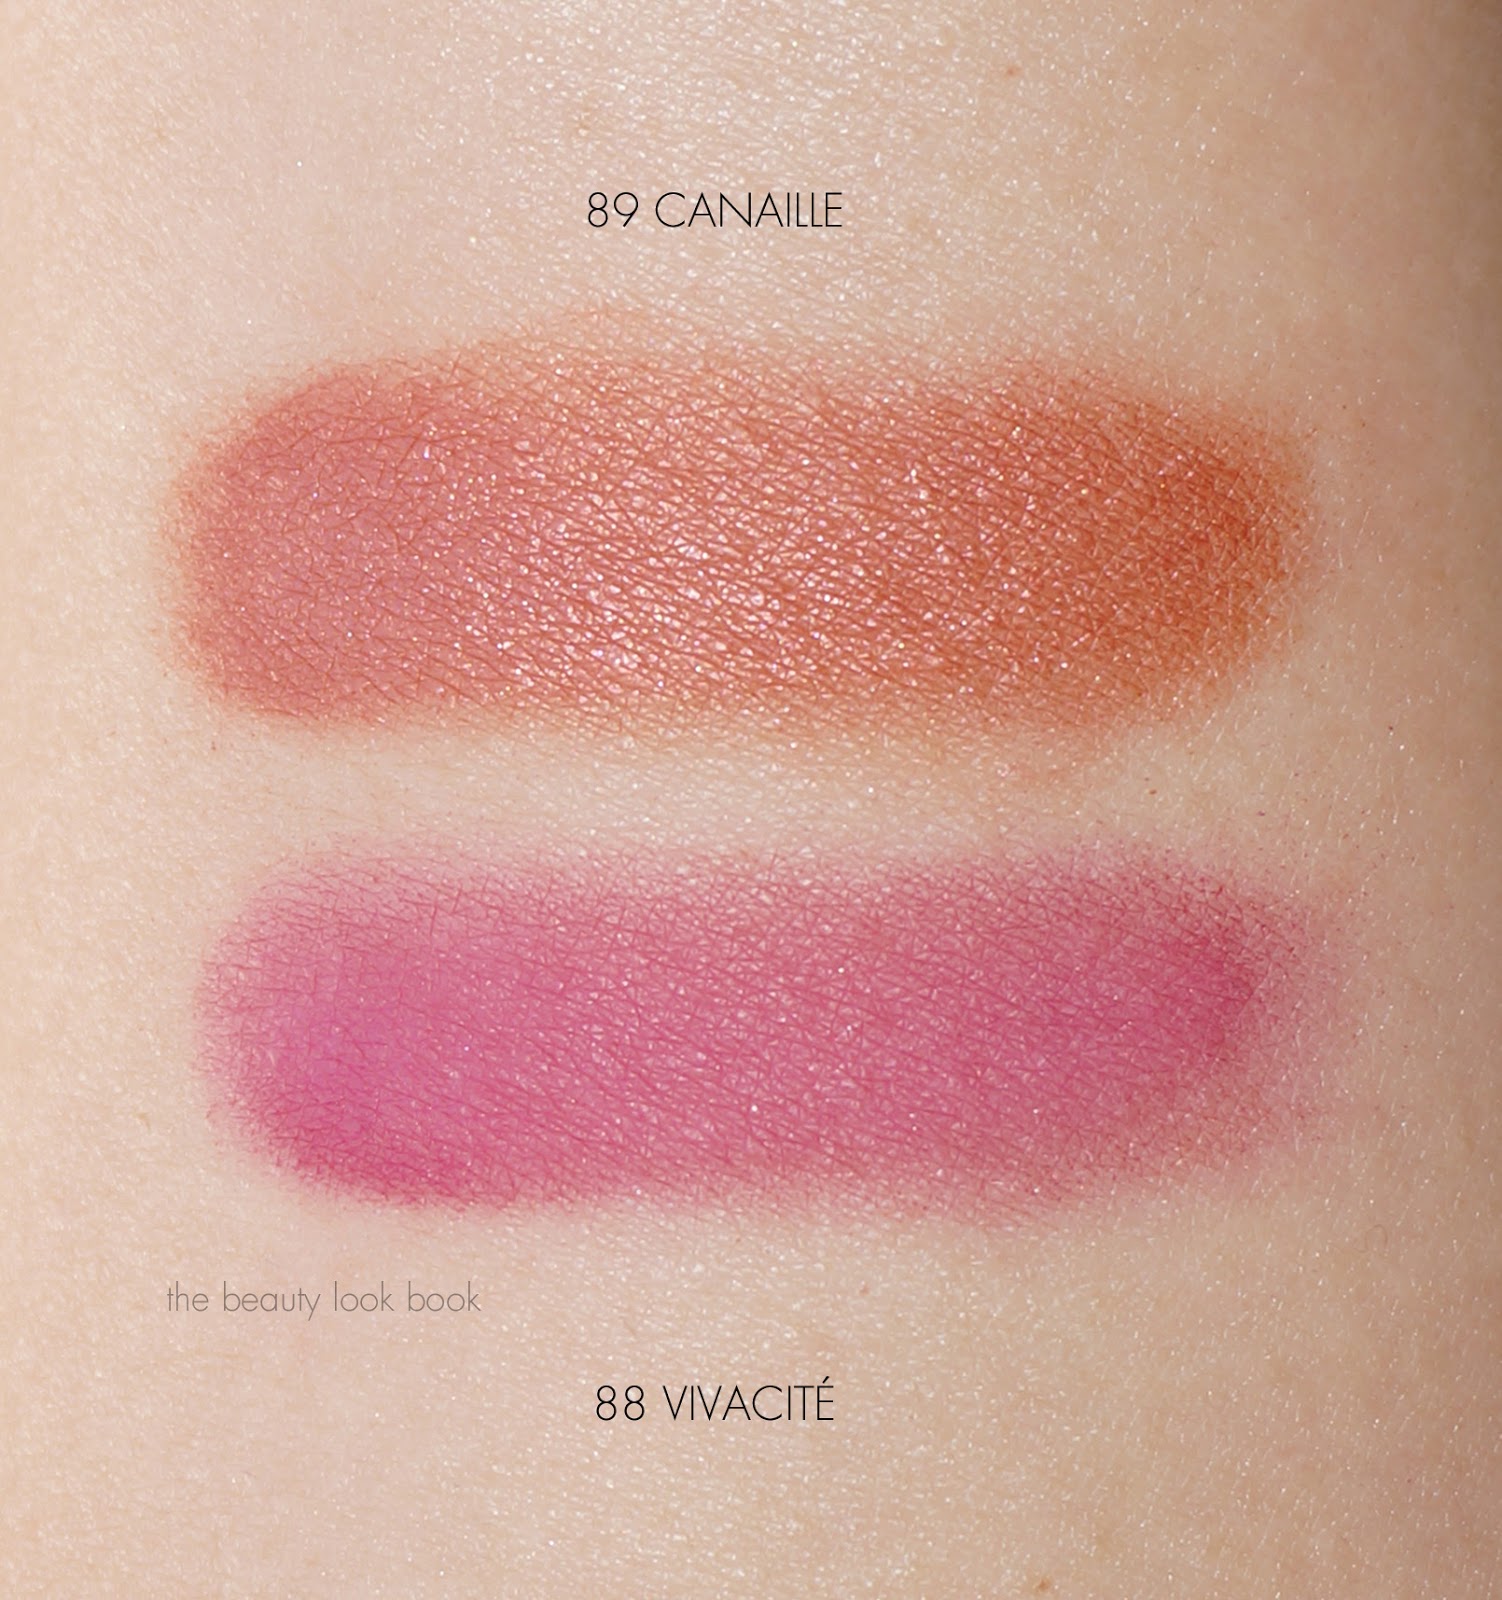 Chanel Joues Contraste Vivacité #88 and Canaille #89 - The Beauty